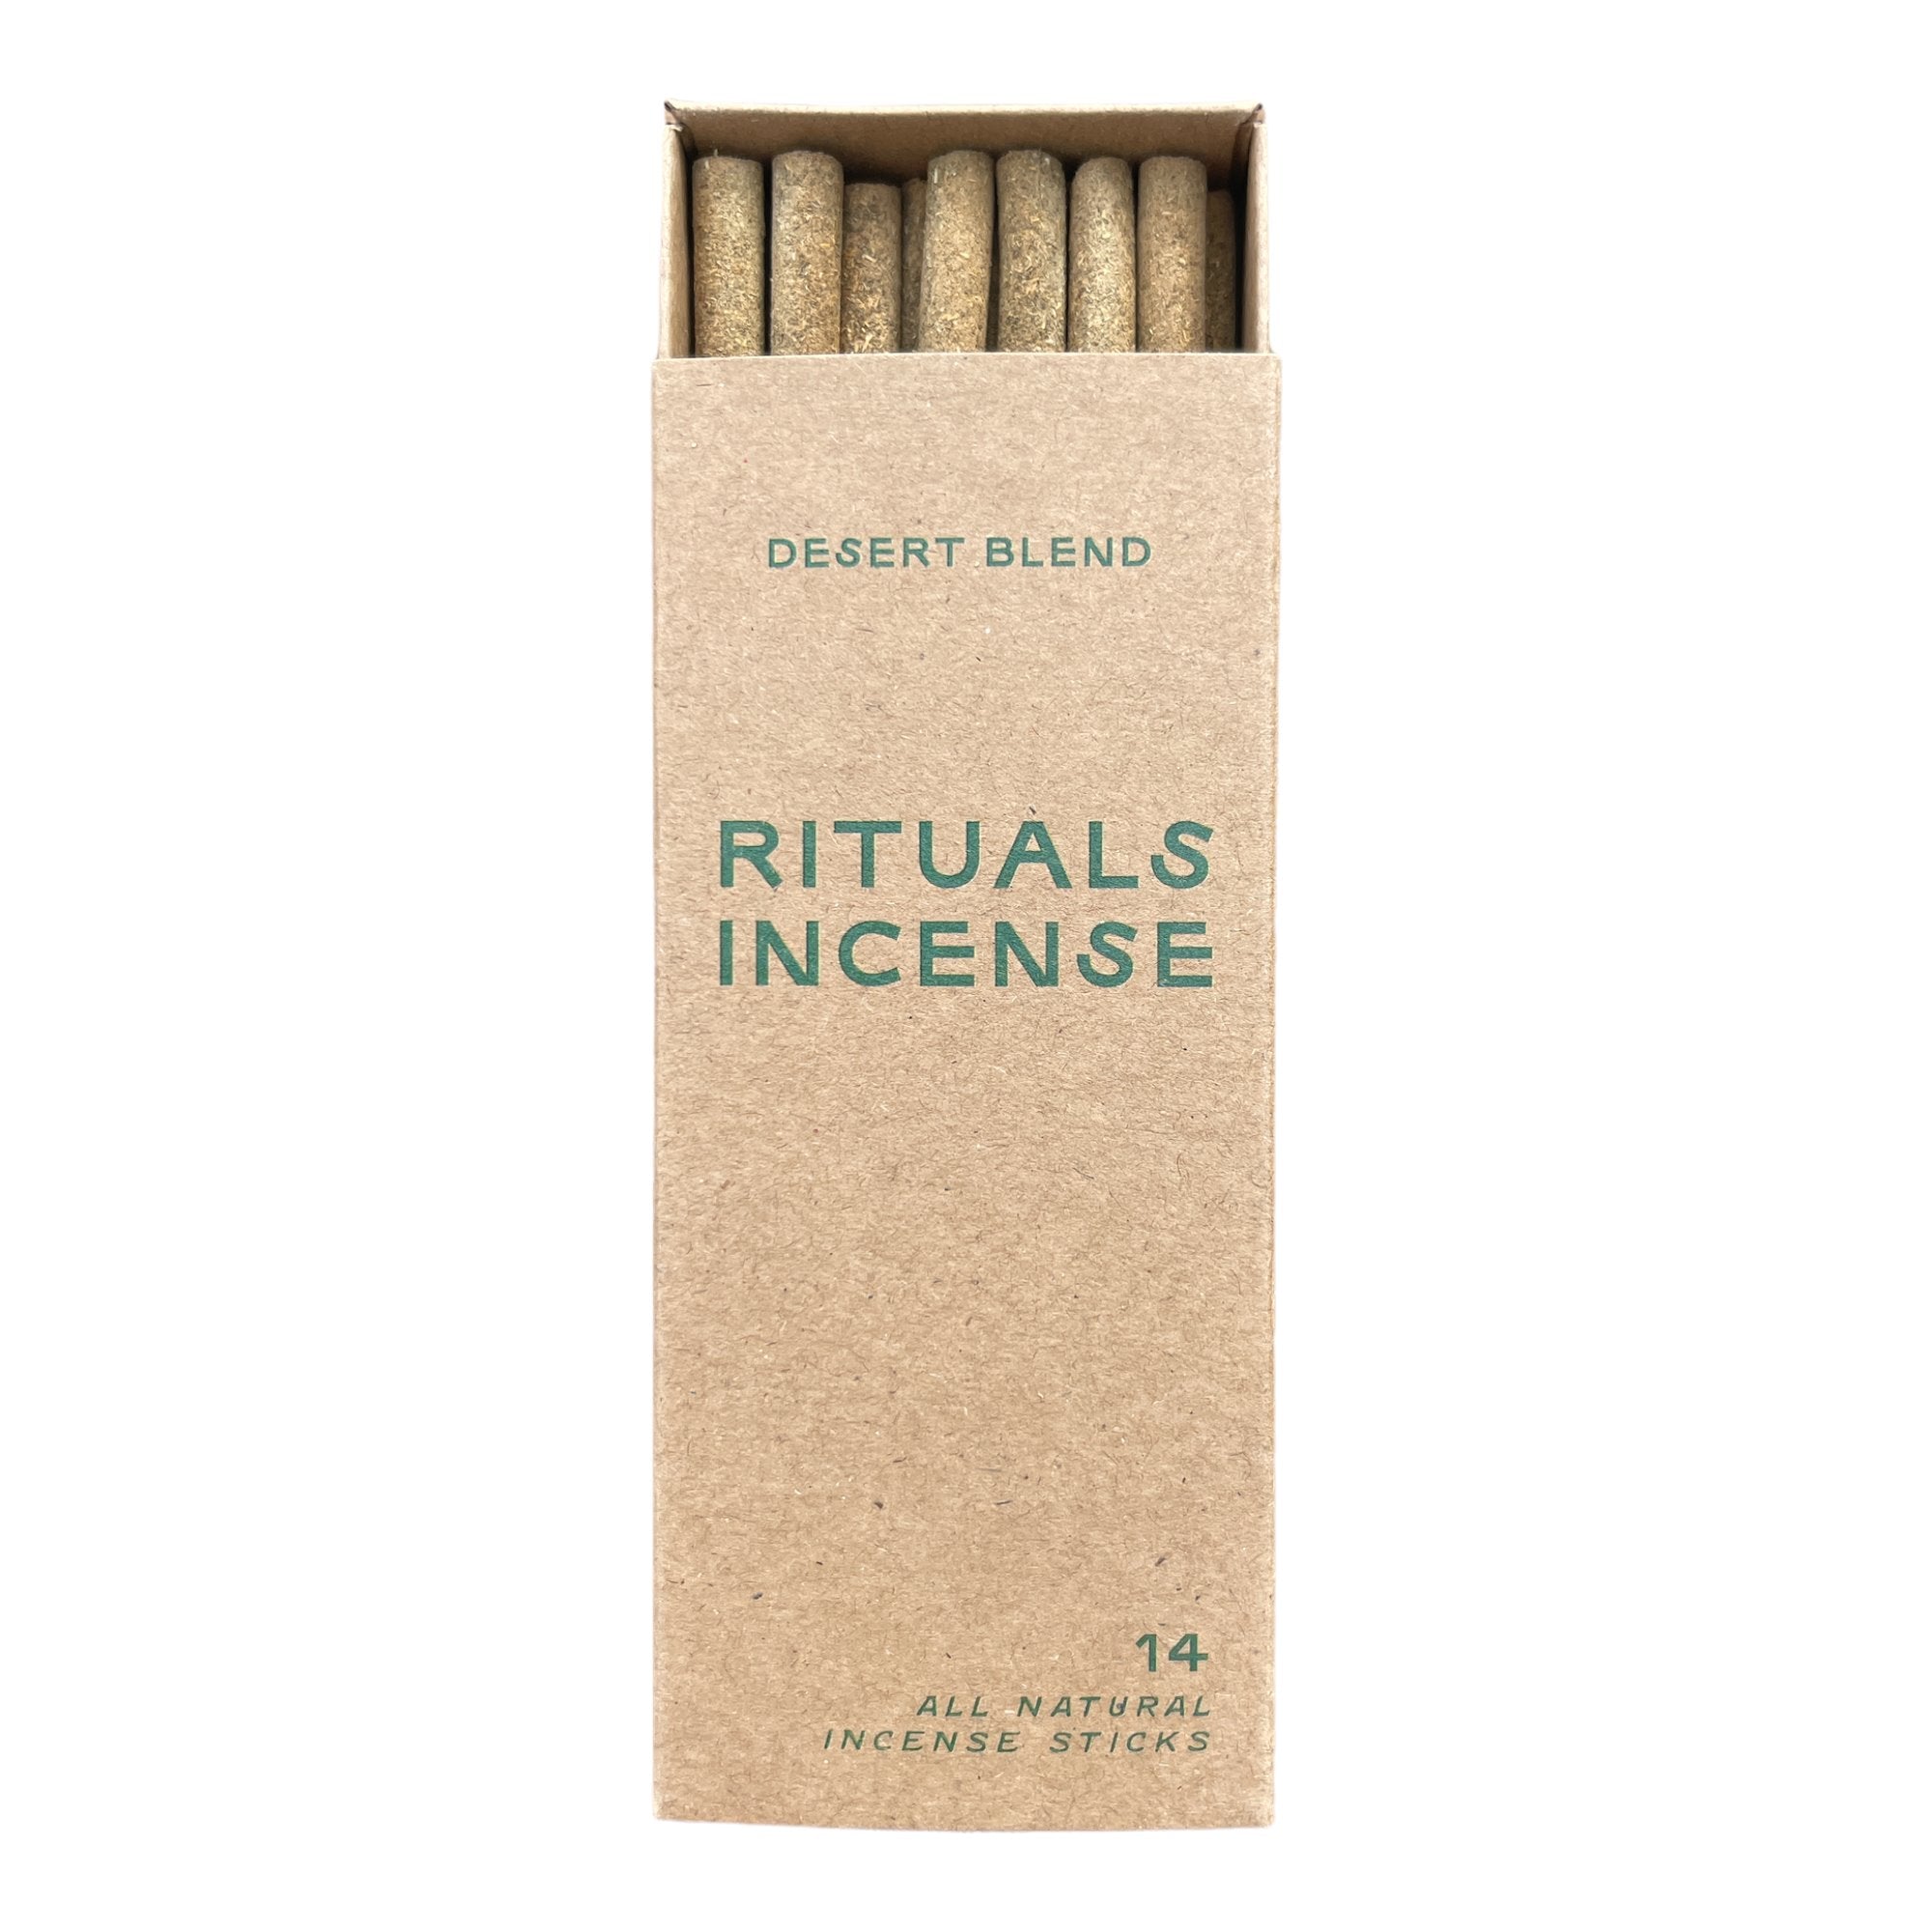 Desert Blend Incense | 14 Pack RITUALS INCENSE 